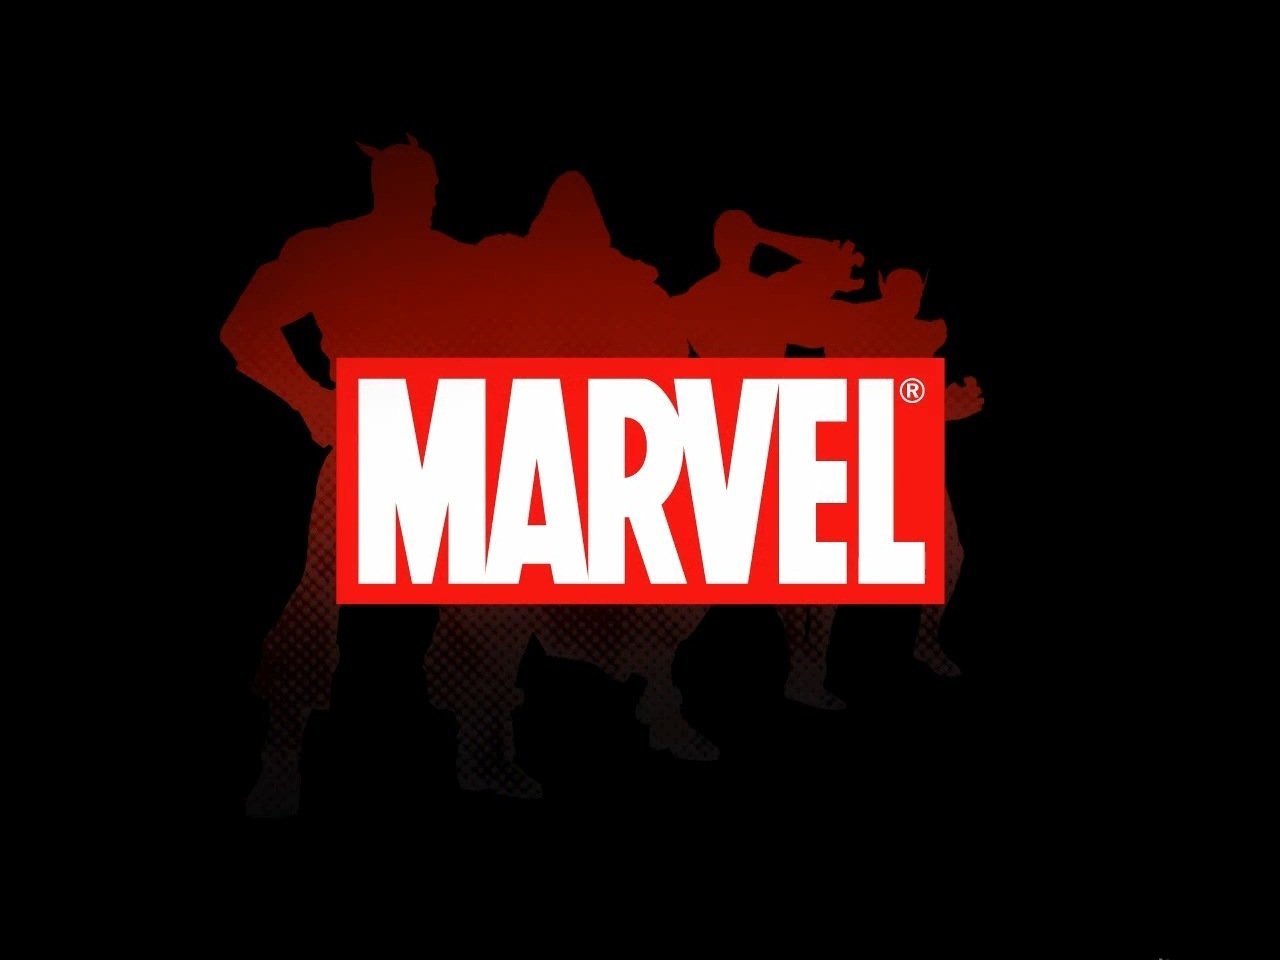 Сайт marvels. Марвел логотип. Марвел надпись картинки. Марвел красные буквы. Надпись Марвел на черном фоне.